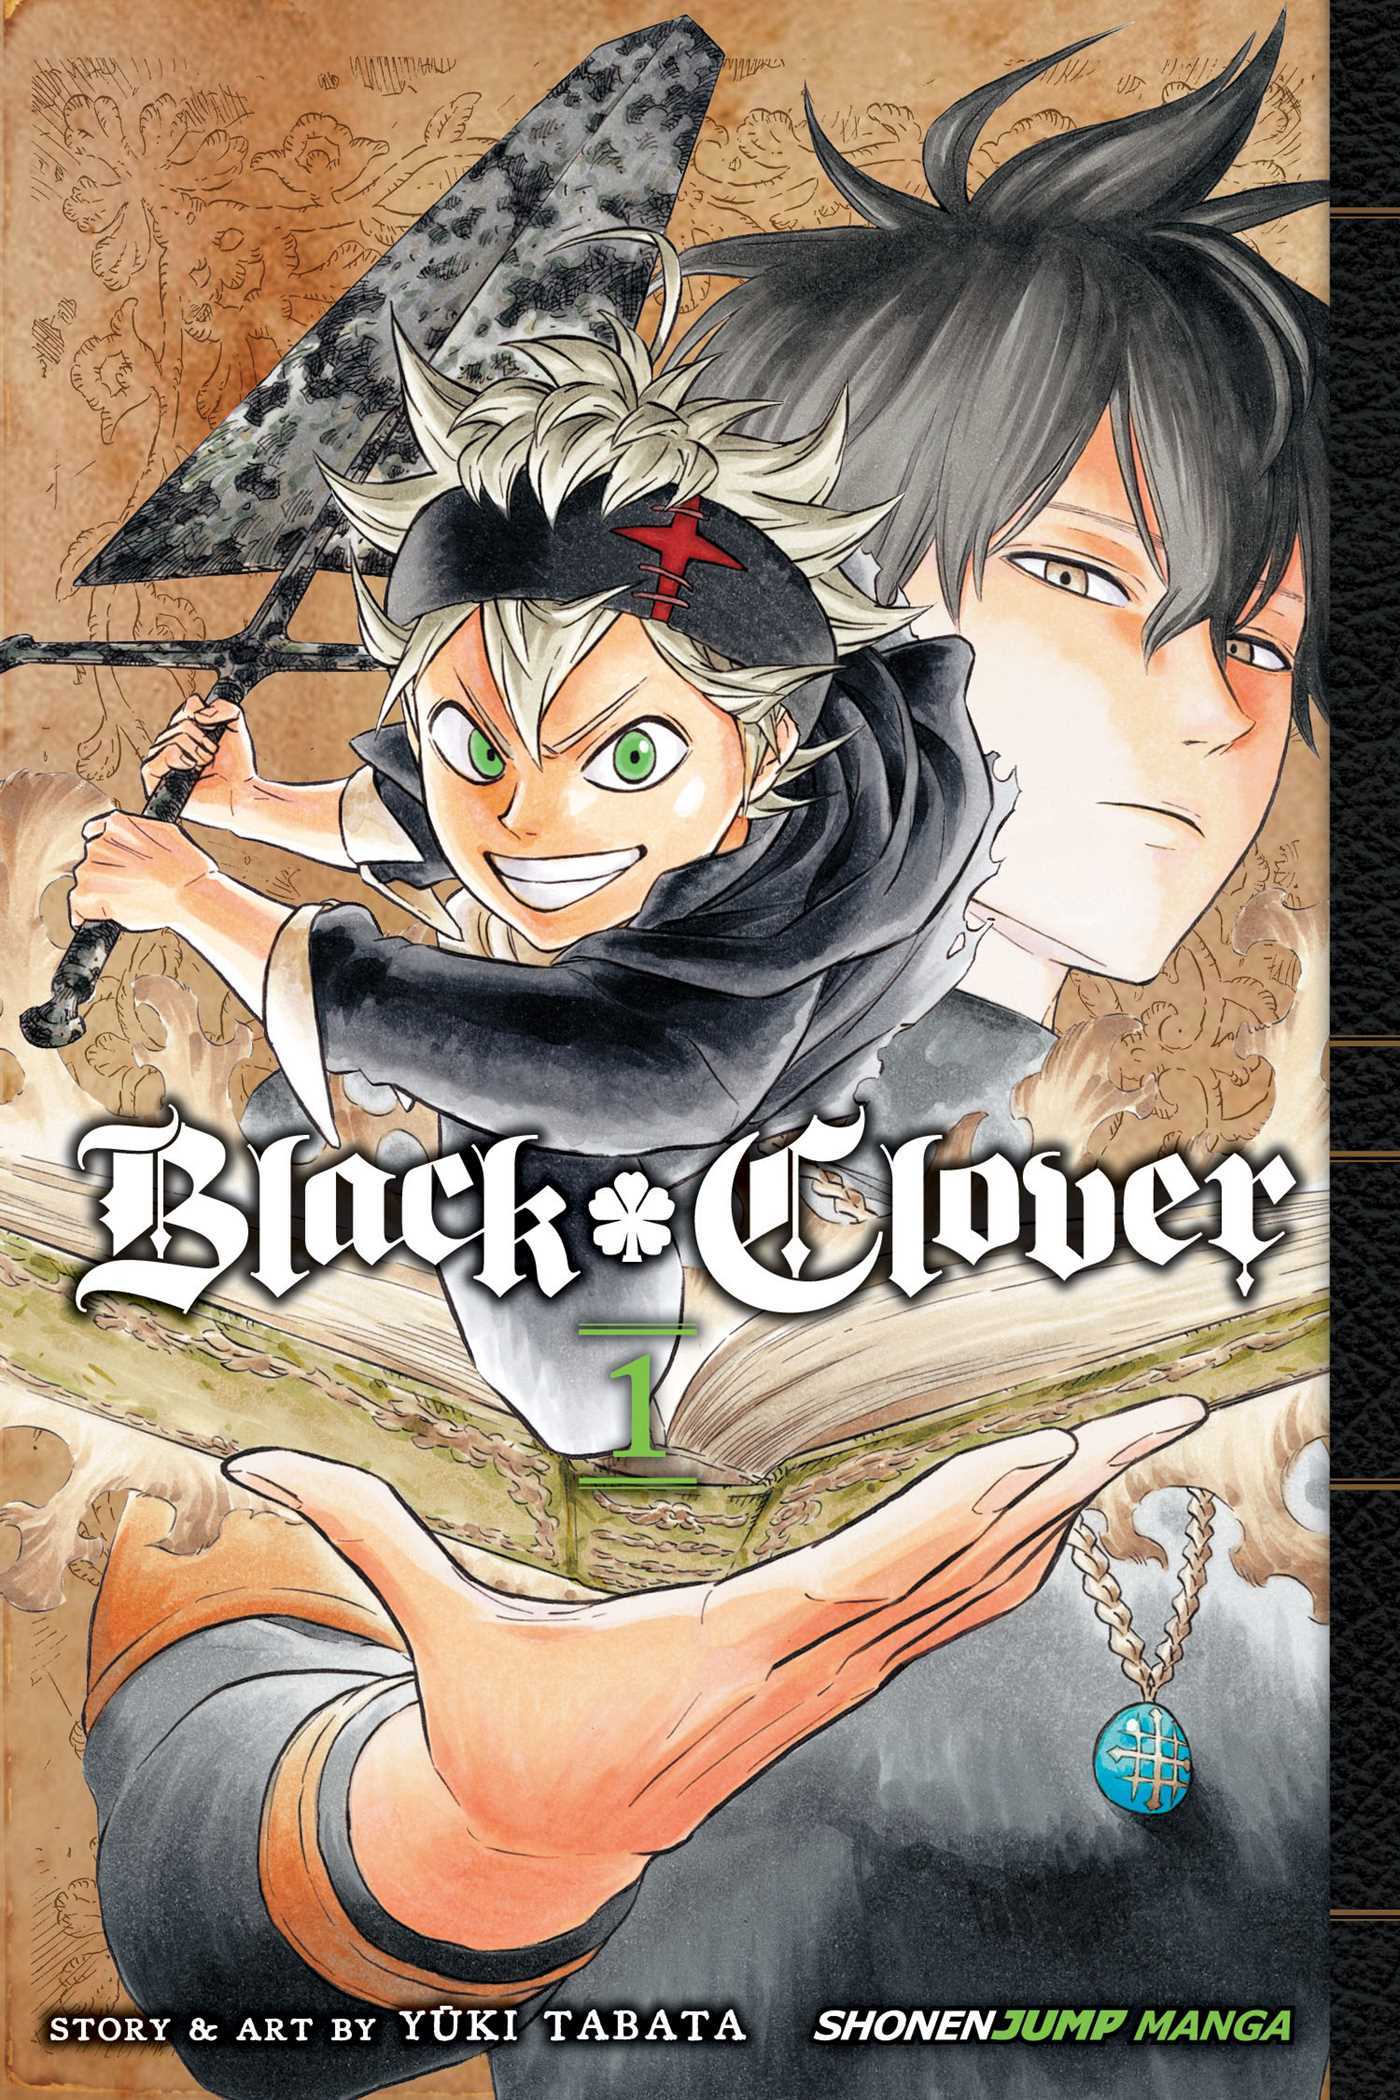 Black Clover Vol.1 - Yuki Tabata